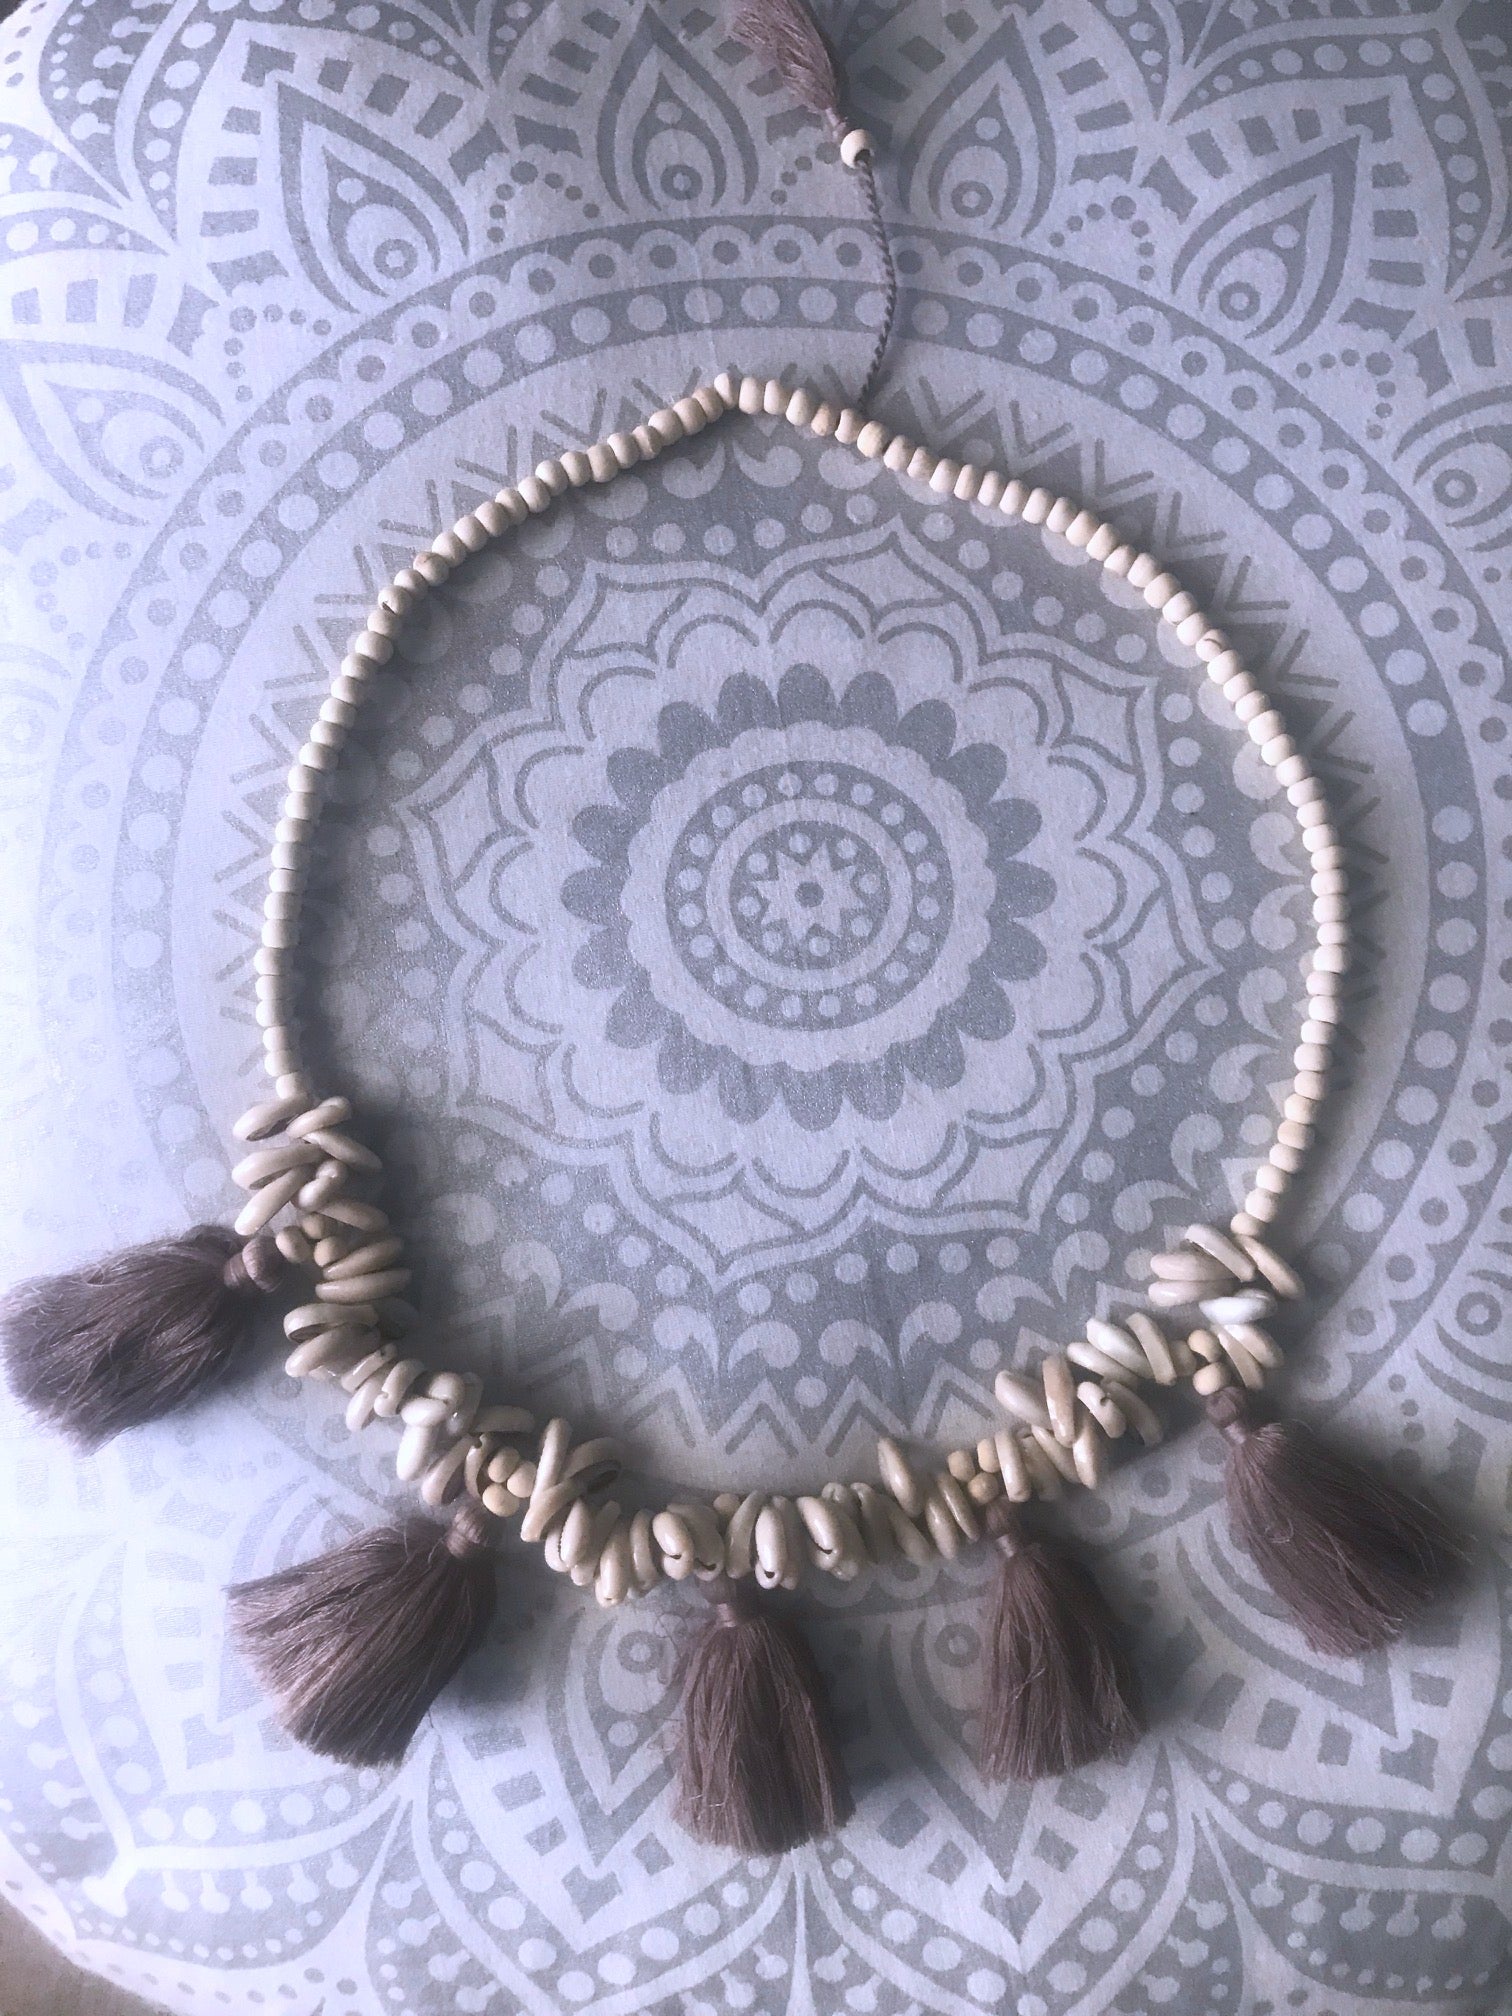 TOLEDO tassels necklace